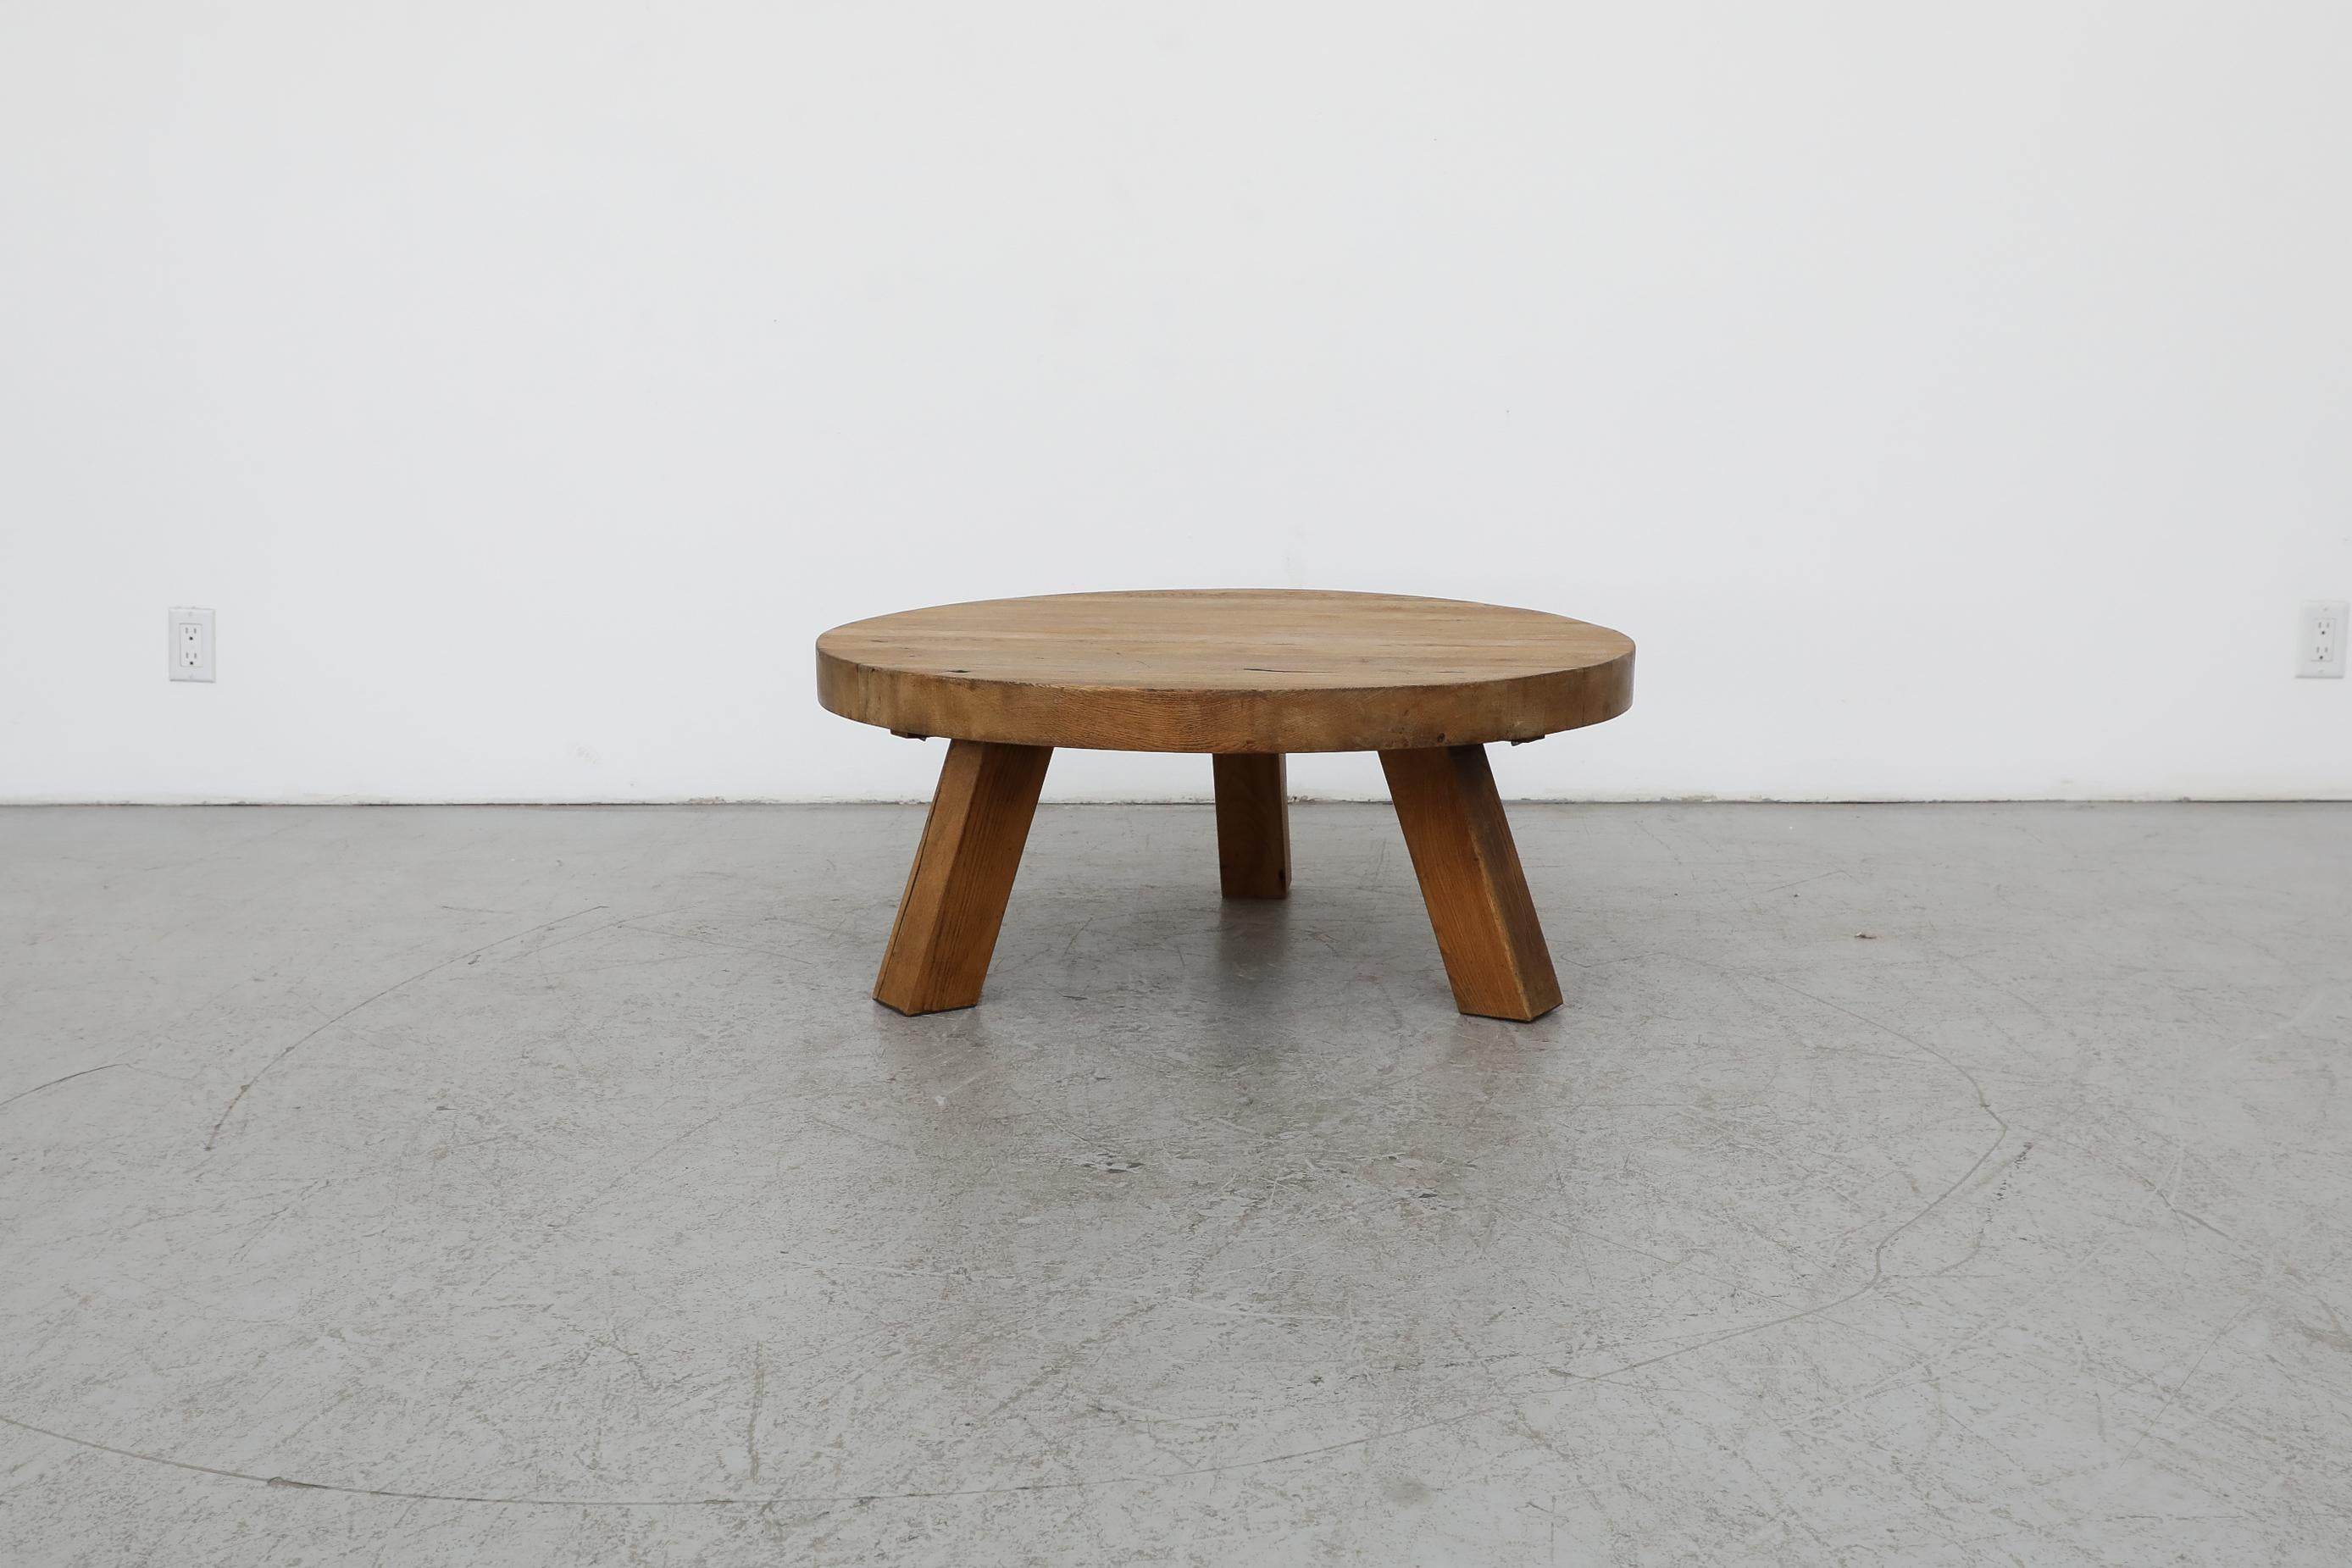 Pierre Chapo Inspired Round Brutalist Oak Coffee Table 1